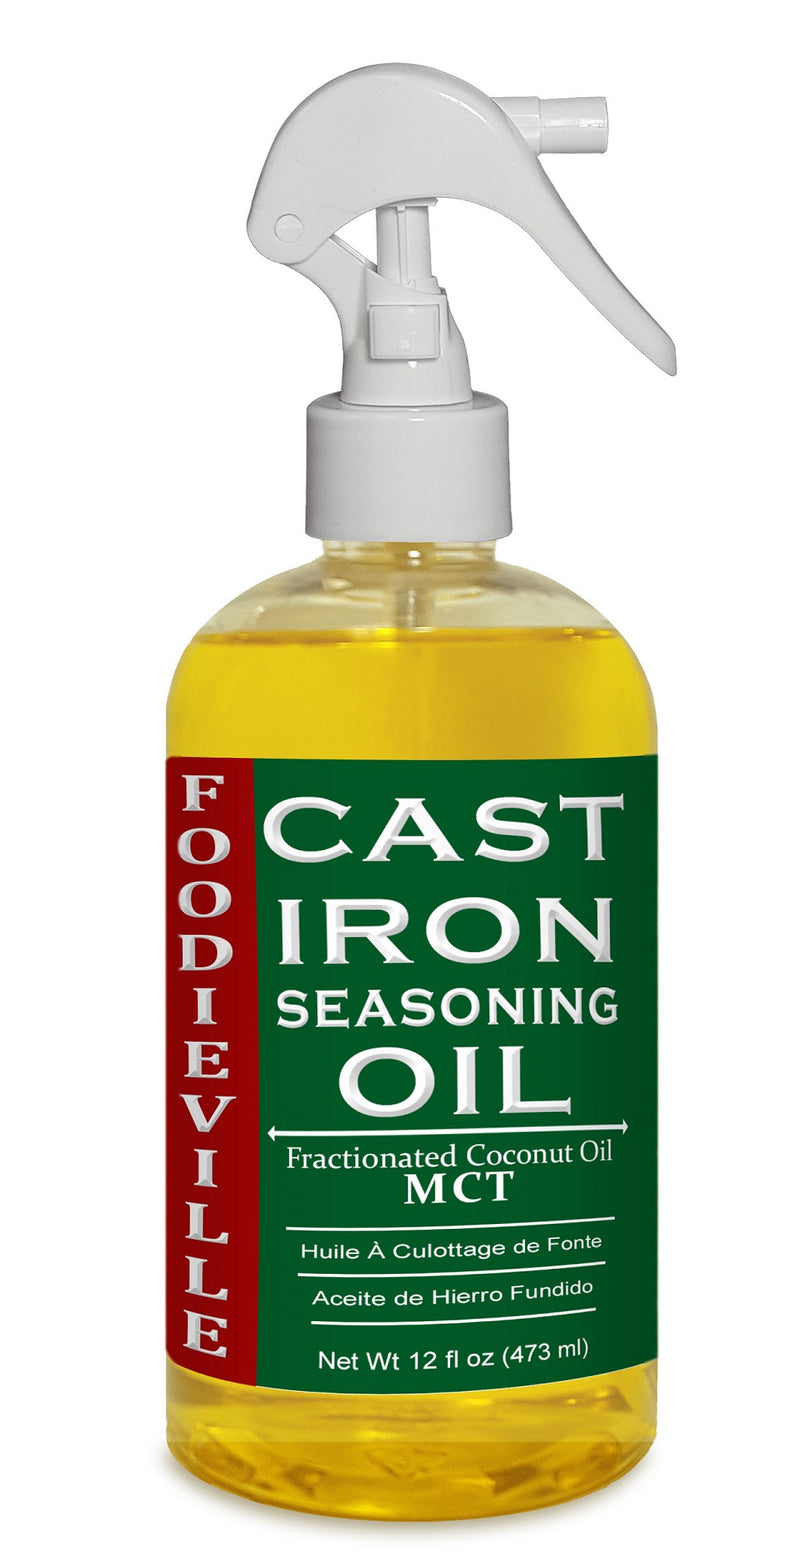 The Best Oils to Season Cast Iron · Nourish and Nestle